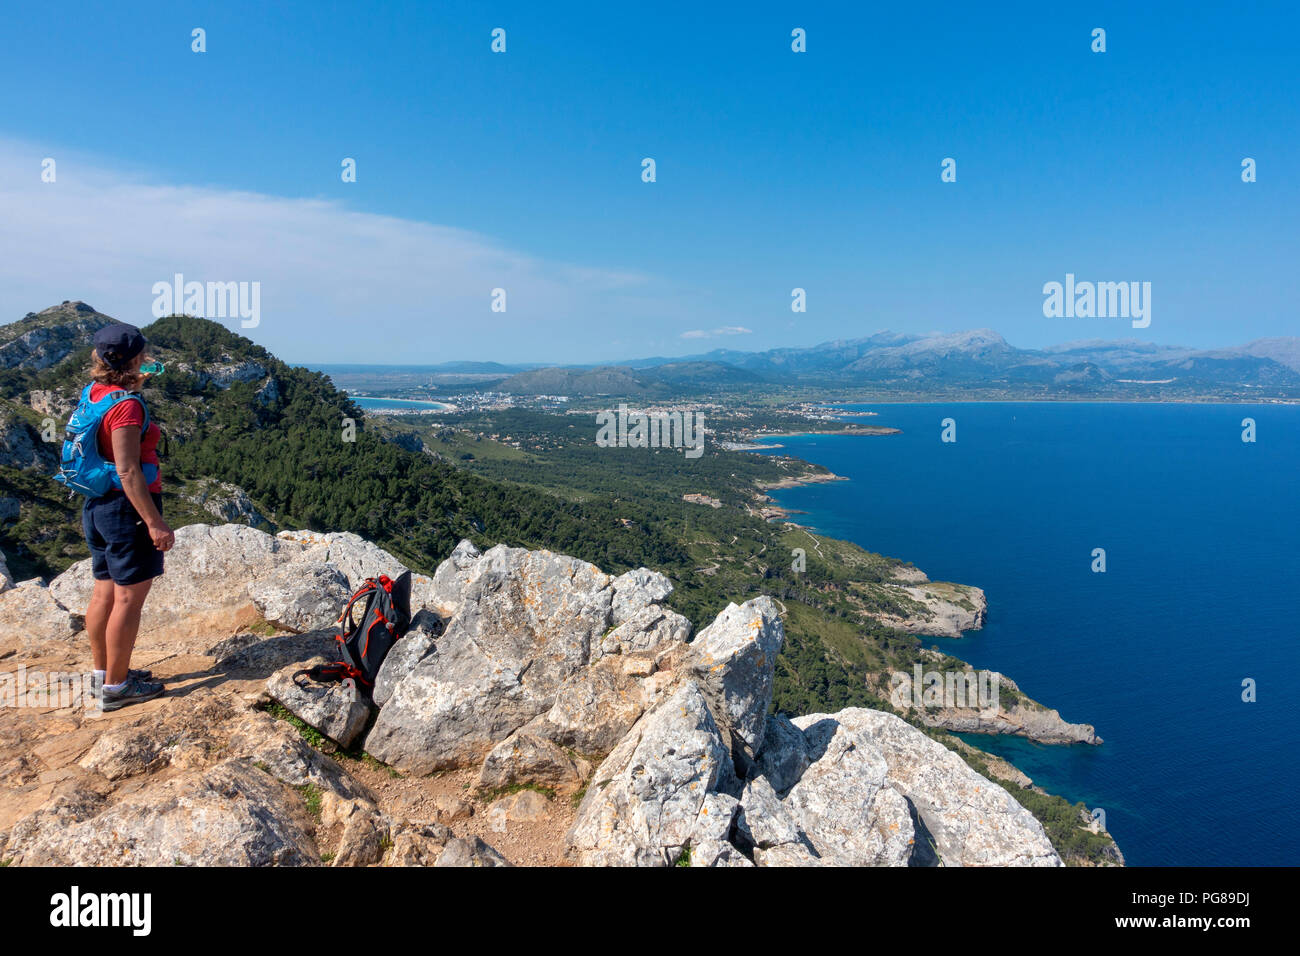 Woman contemplating the Alcudia bay from Penya Roja peak.Alcudia.Mallorca Island.Spain Stock Photo